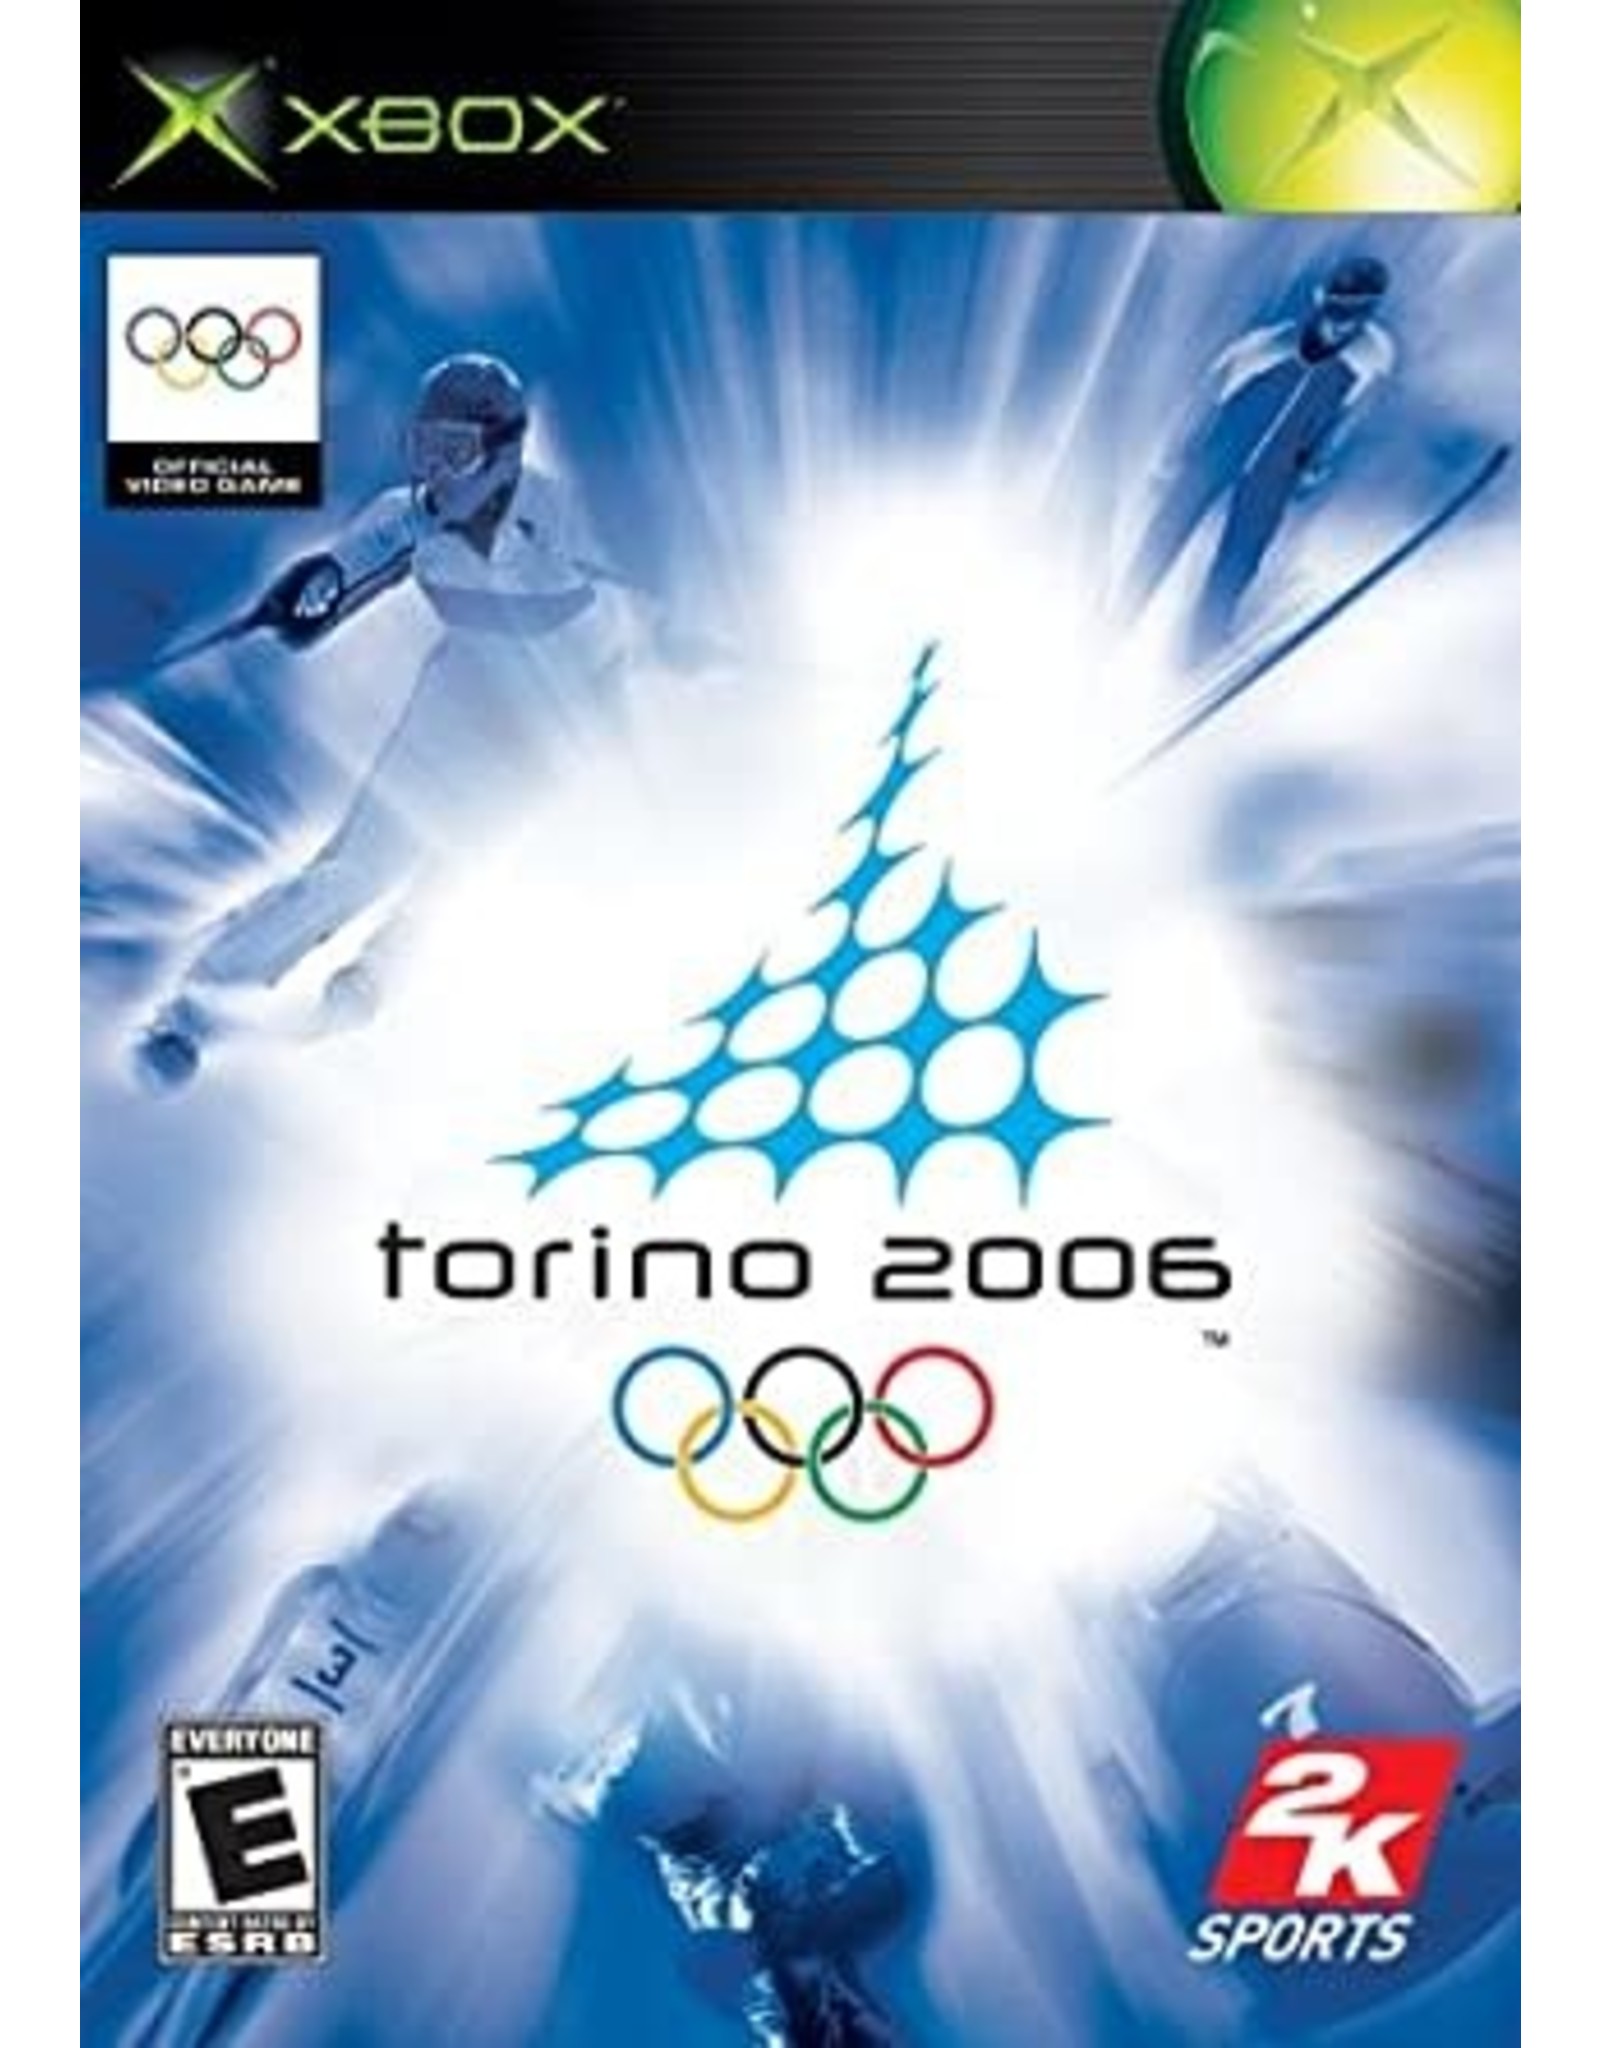 Xbox Torino 2006 (CiB)